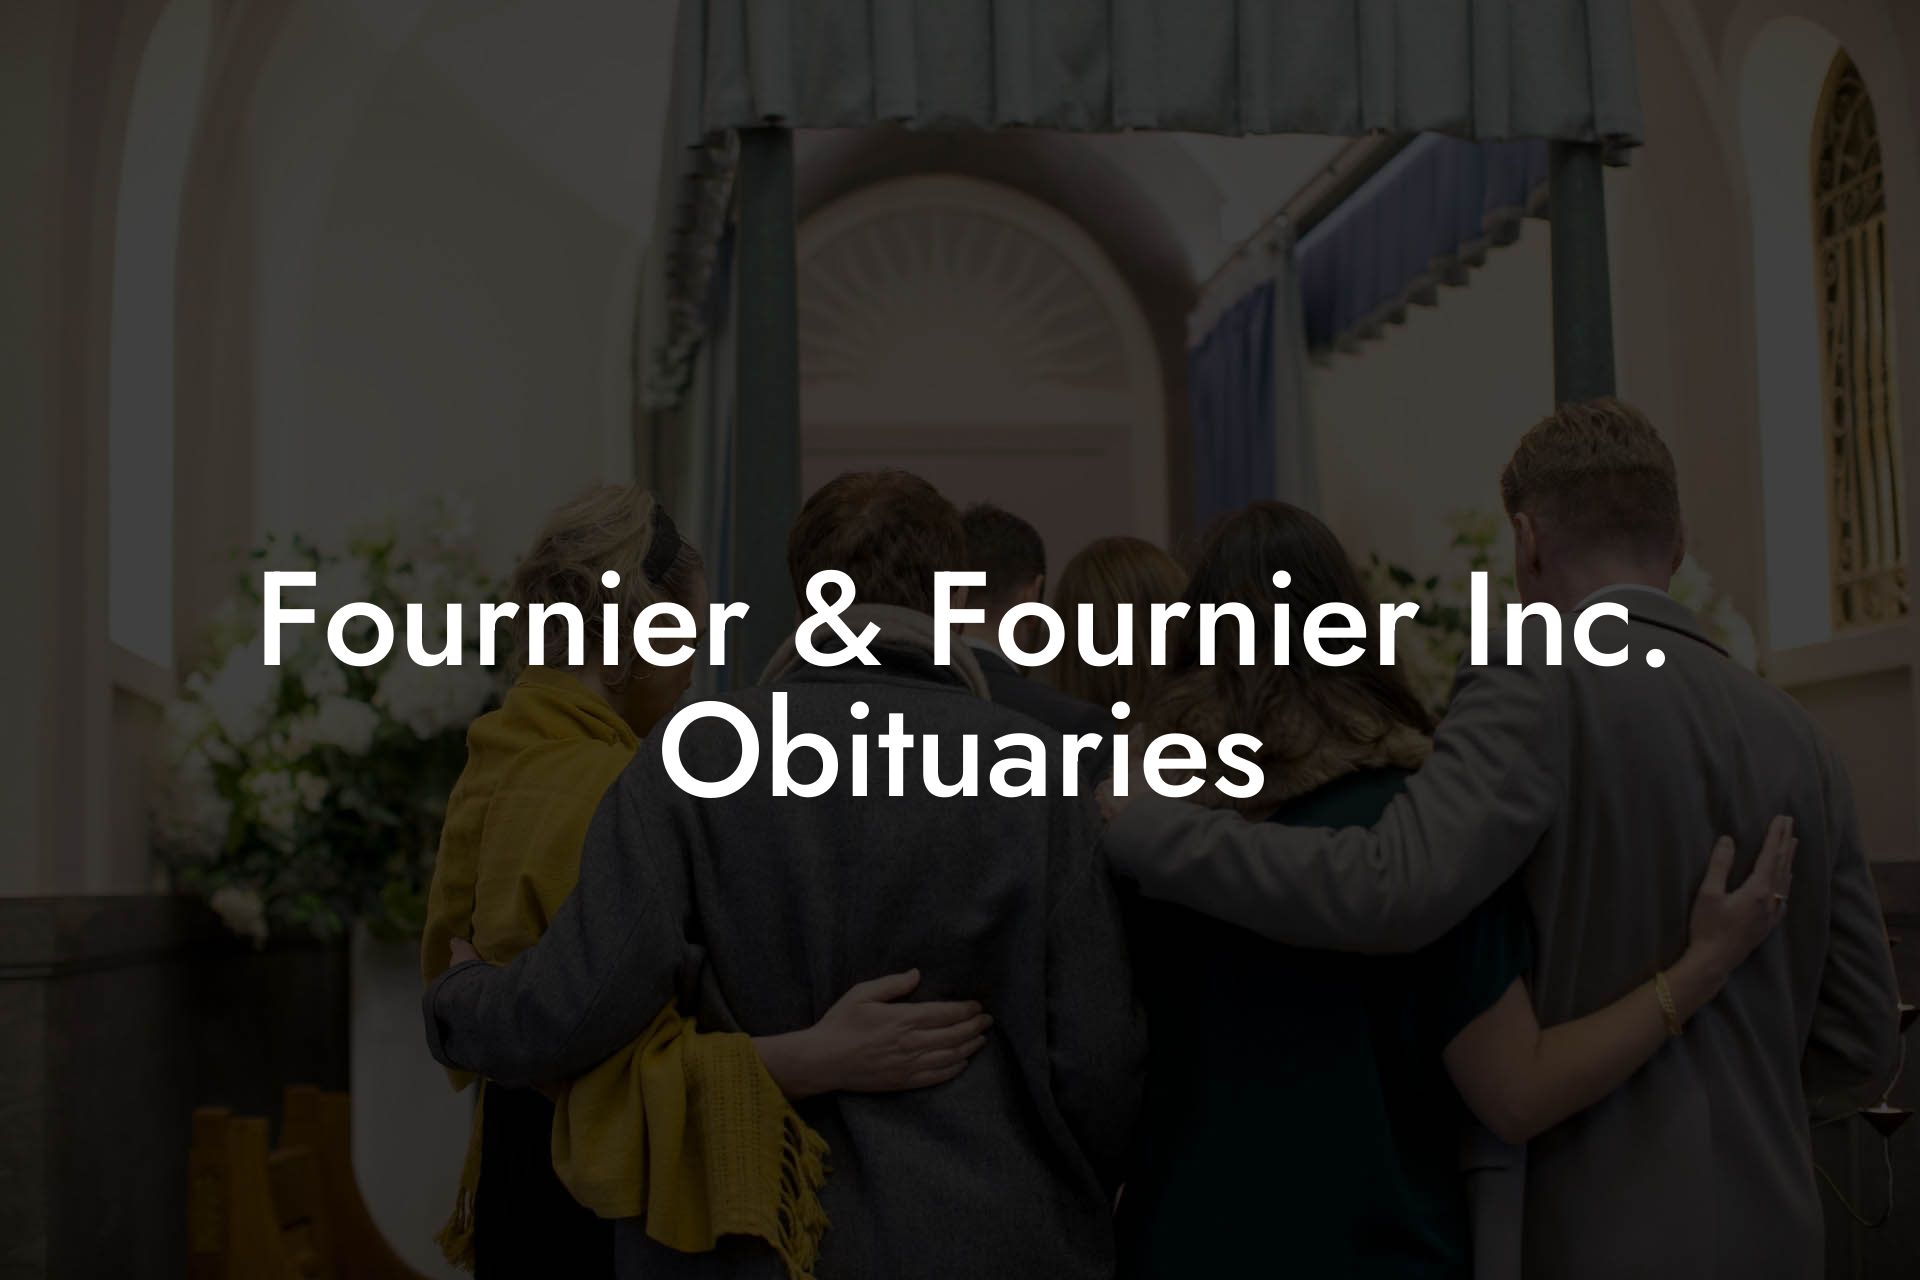 Fournier & Fournier Inc. Obituaries